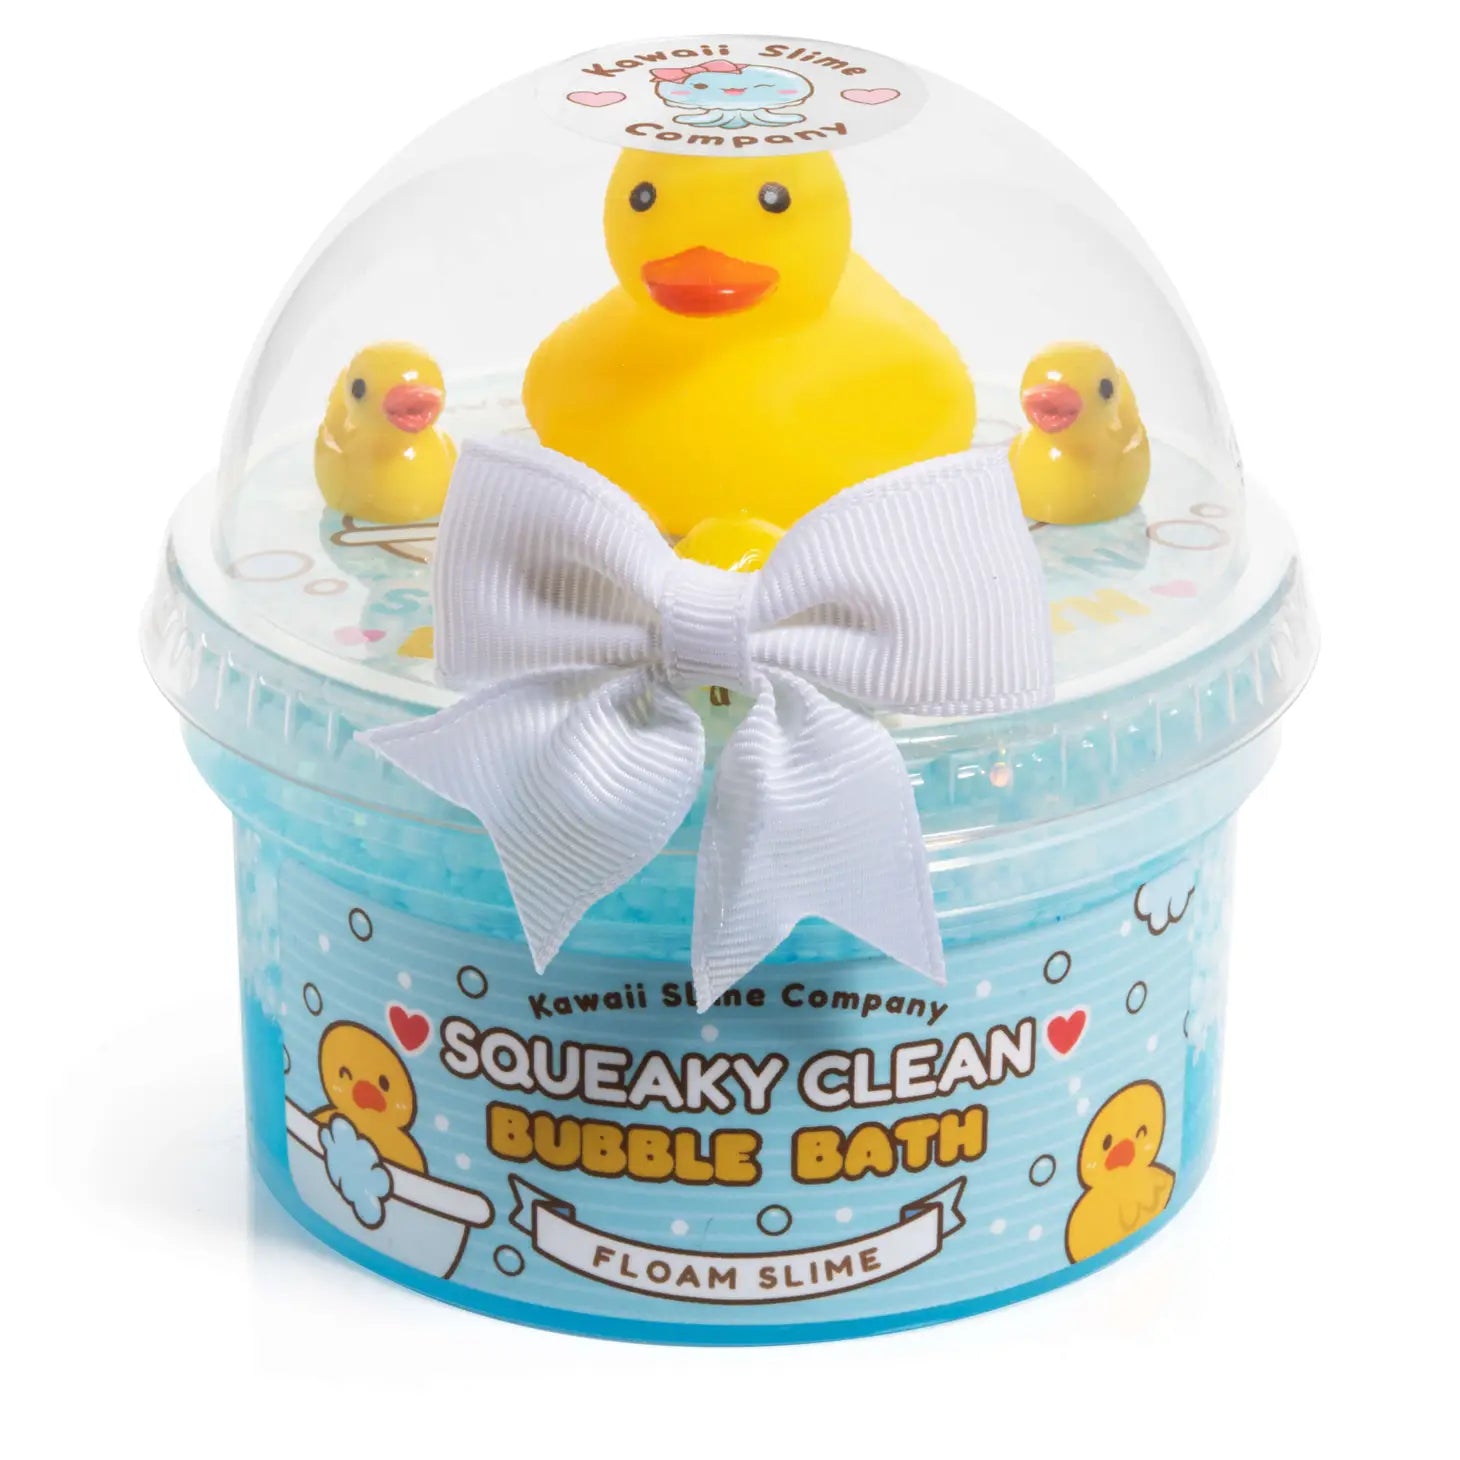 Squeaky Clean Bubble Bath Floam Slime by Kawaii Slime